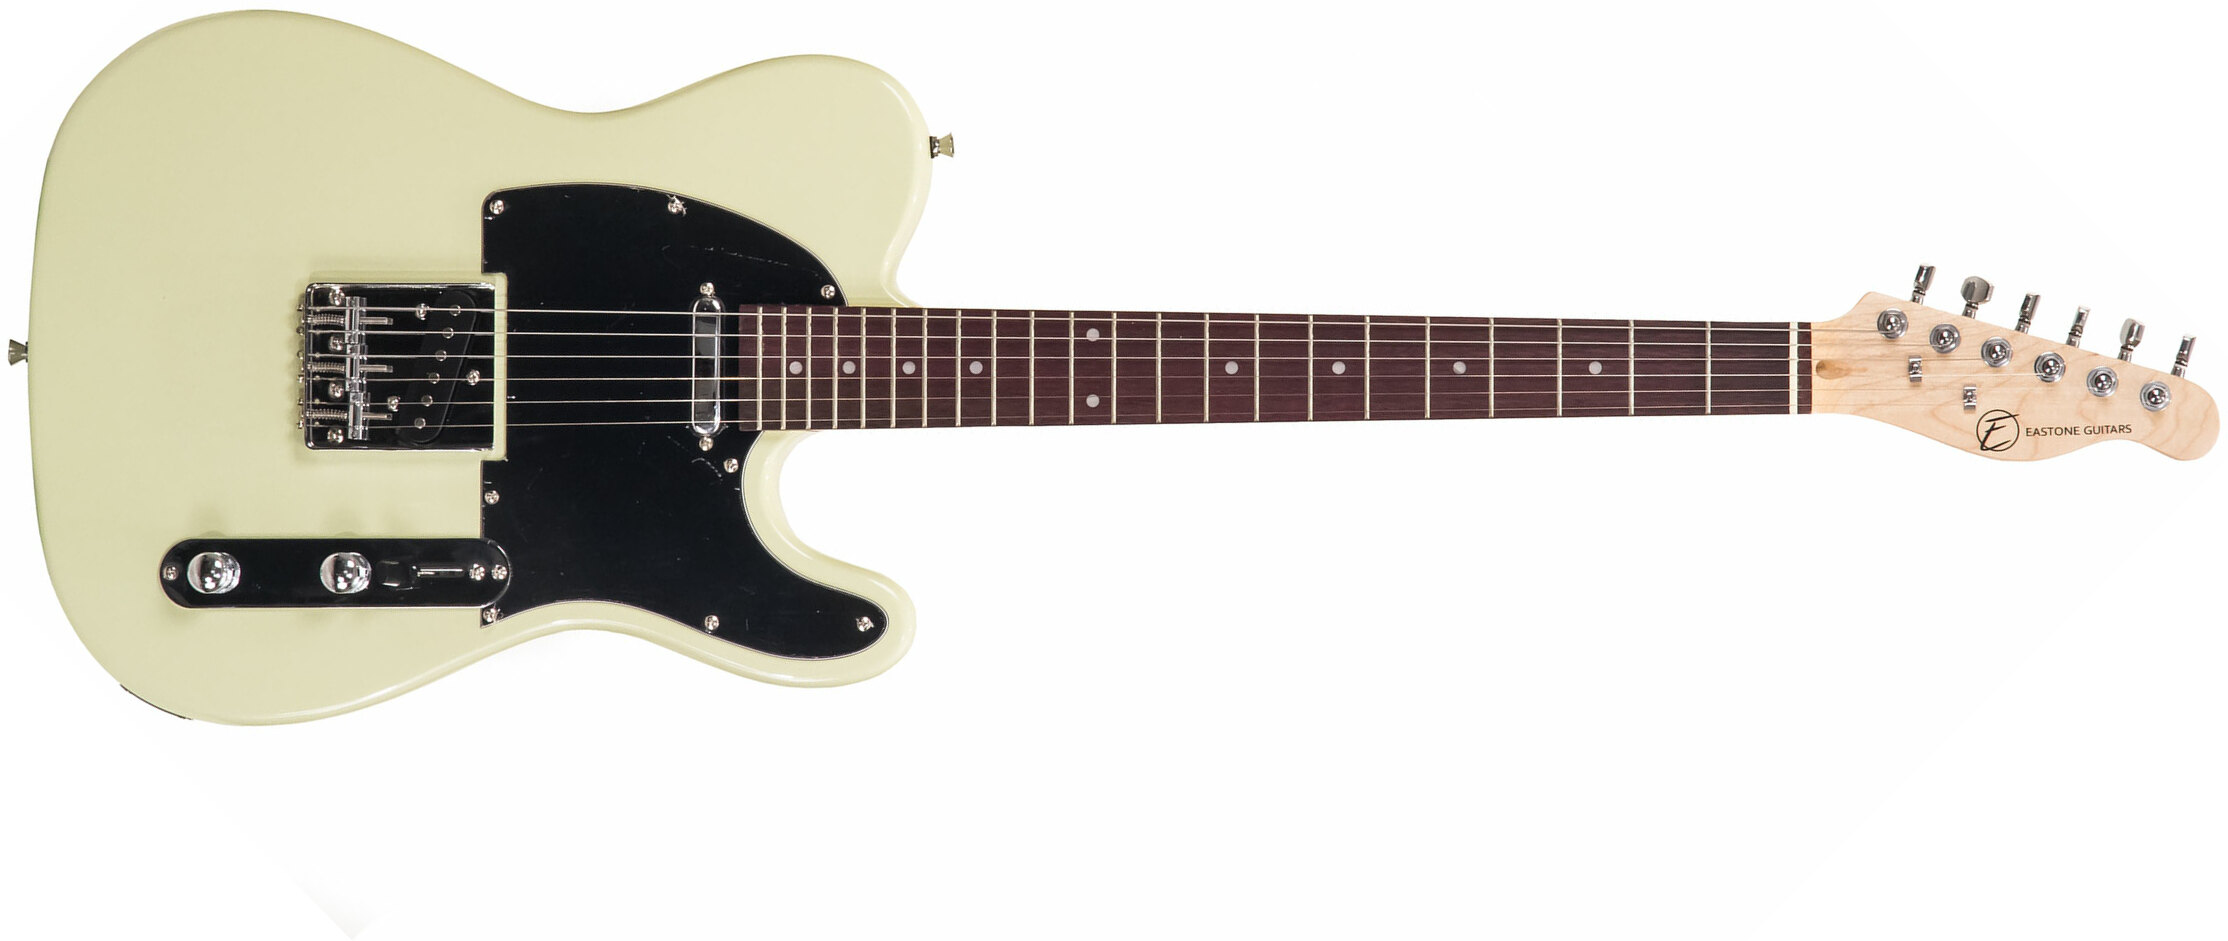 Eastone Tl70 Ss Ht Rw - Ivory - Guitarra eléctrica con forma de tel - Main picture